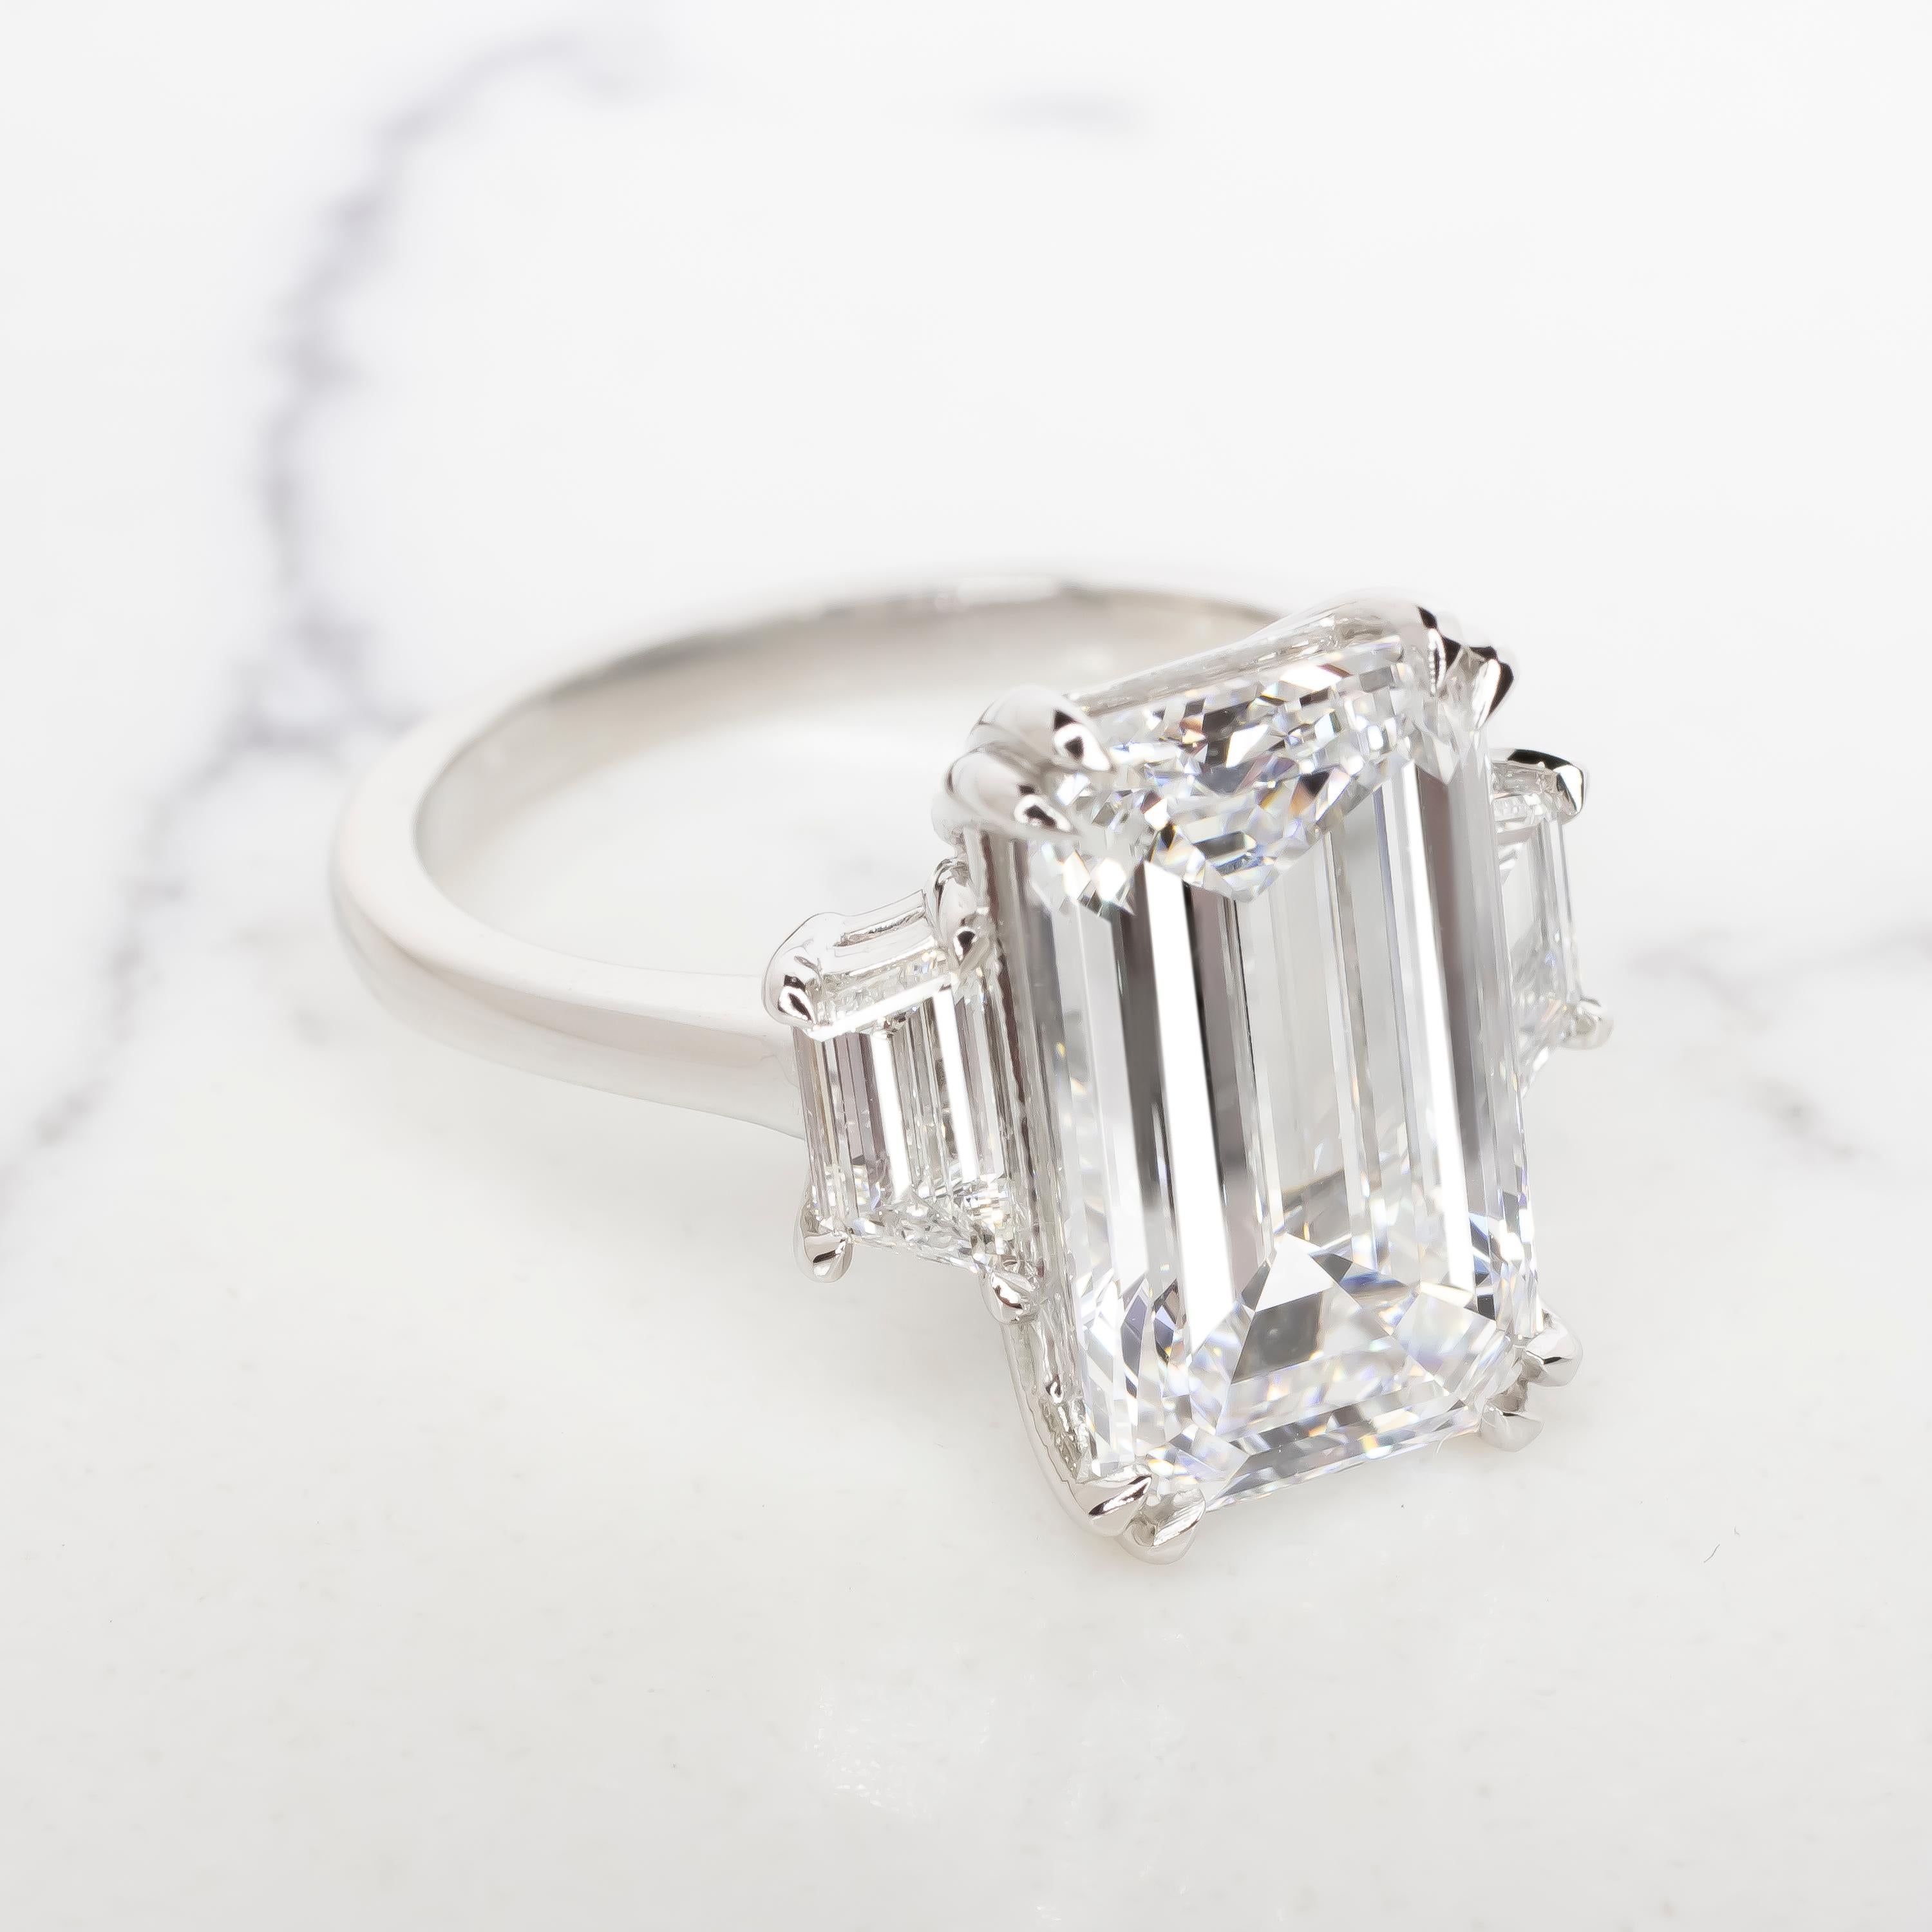 Contemporary Type IIA Golconda D Color GIA Certifield 6 Carat Emerald Cut Diamond Ring